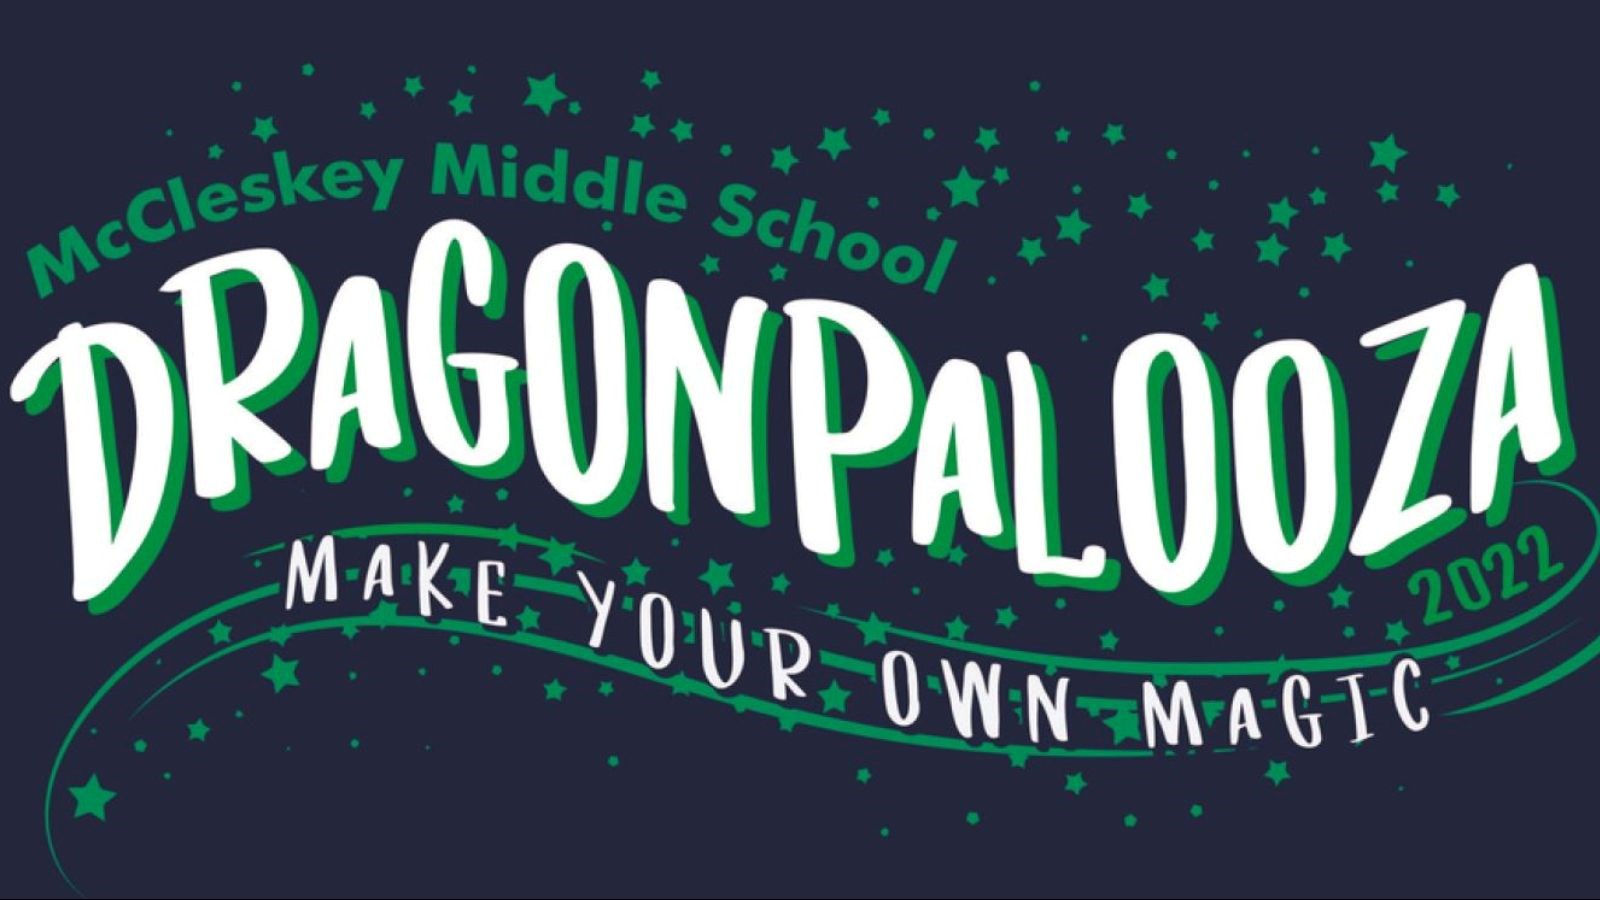 Dragonpalooza Graphic